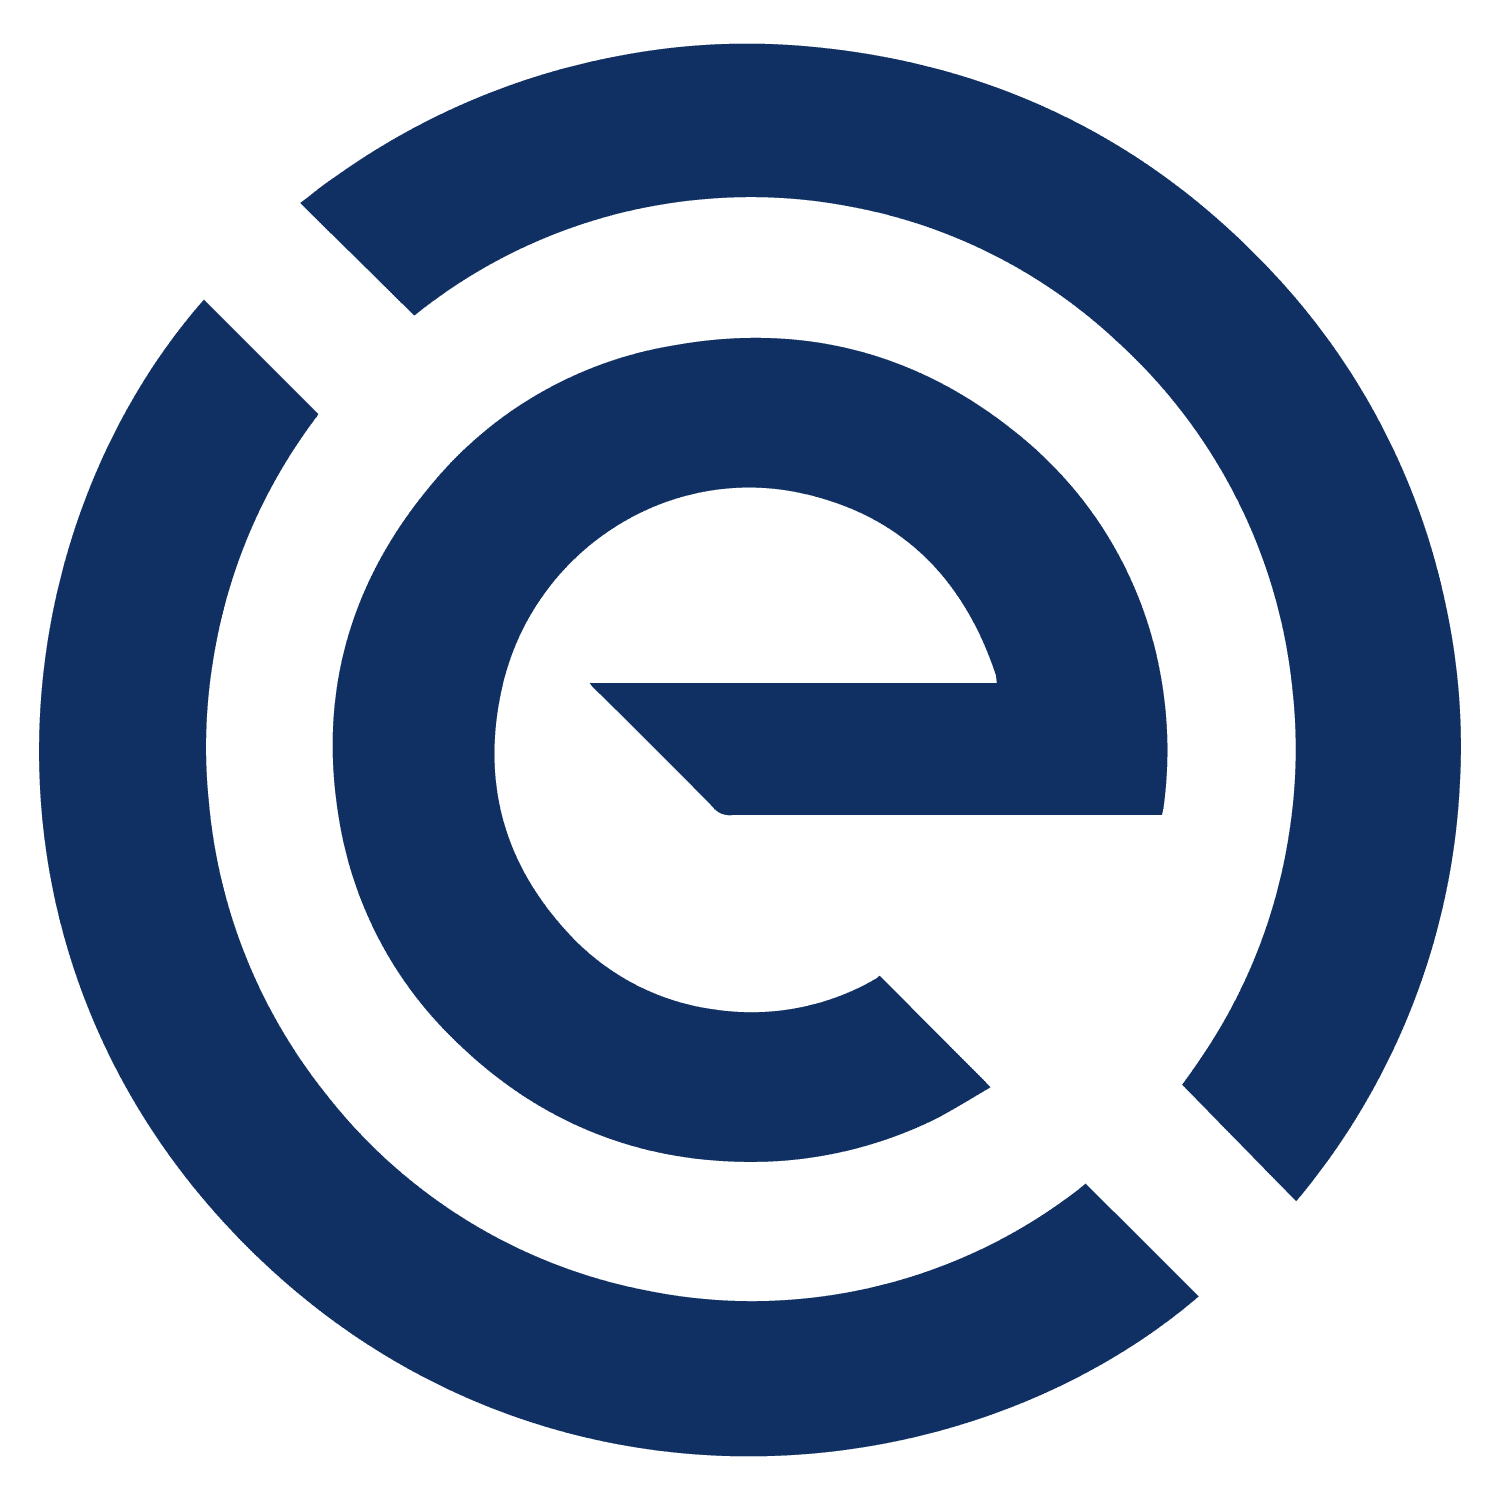 eredivisie logo freelogovectors.net